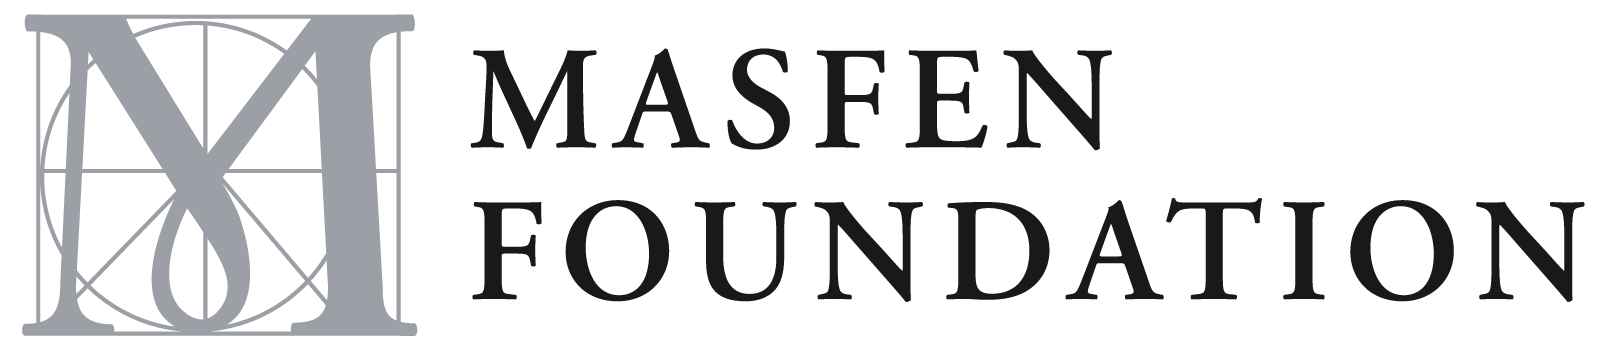 Masfen Foundation logo.png